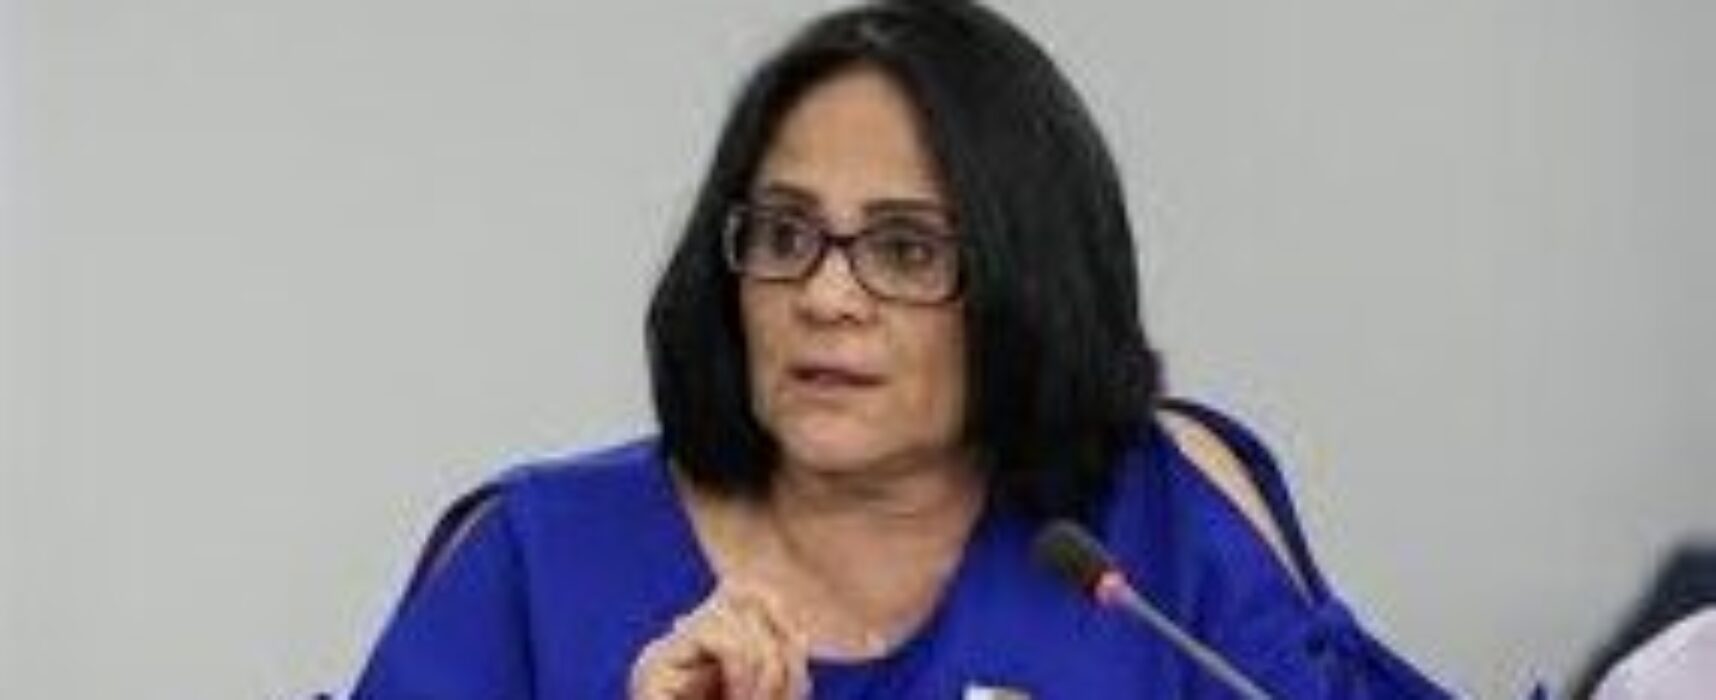 Ministra Damares entregará veículos a 17 conselhos tutelares da Bahia